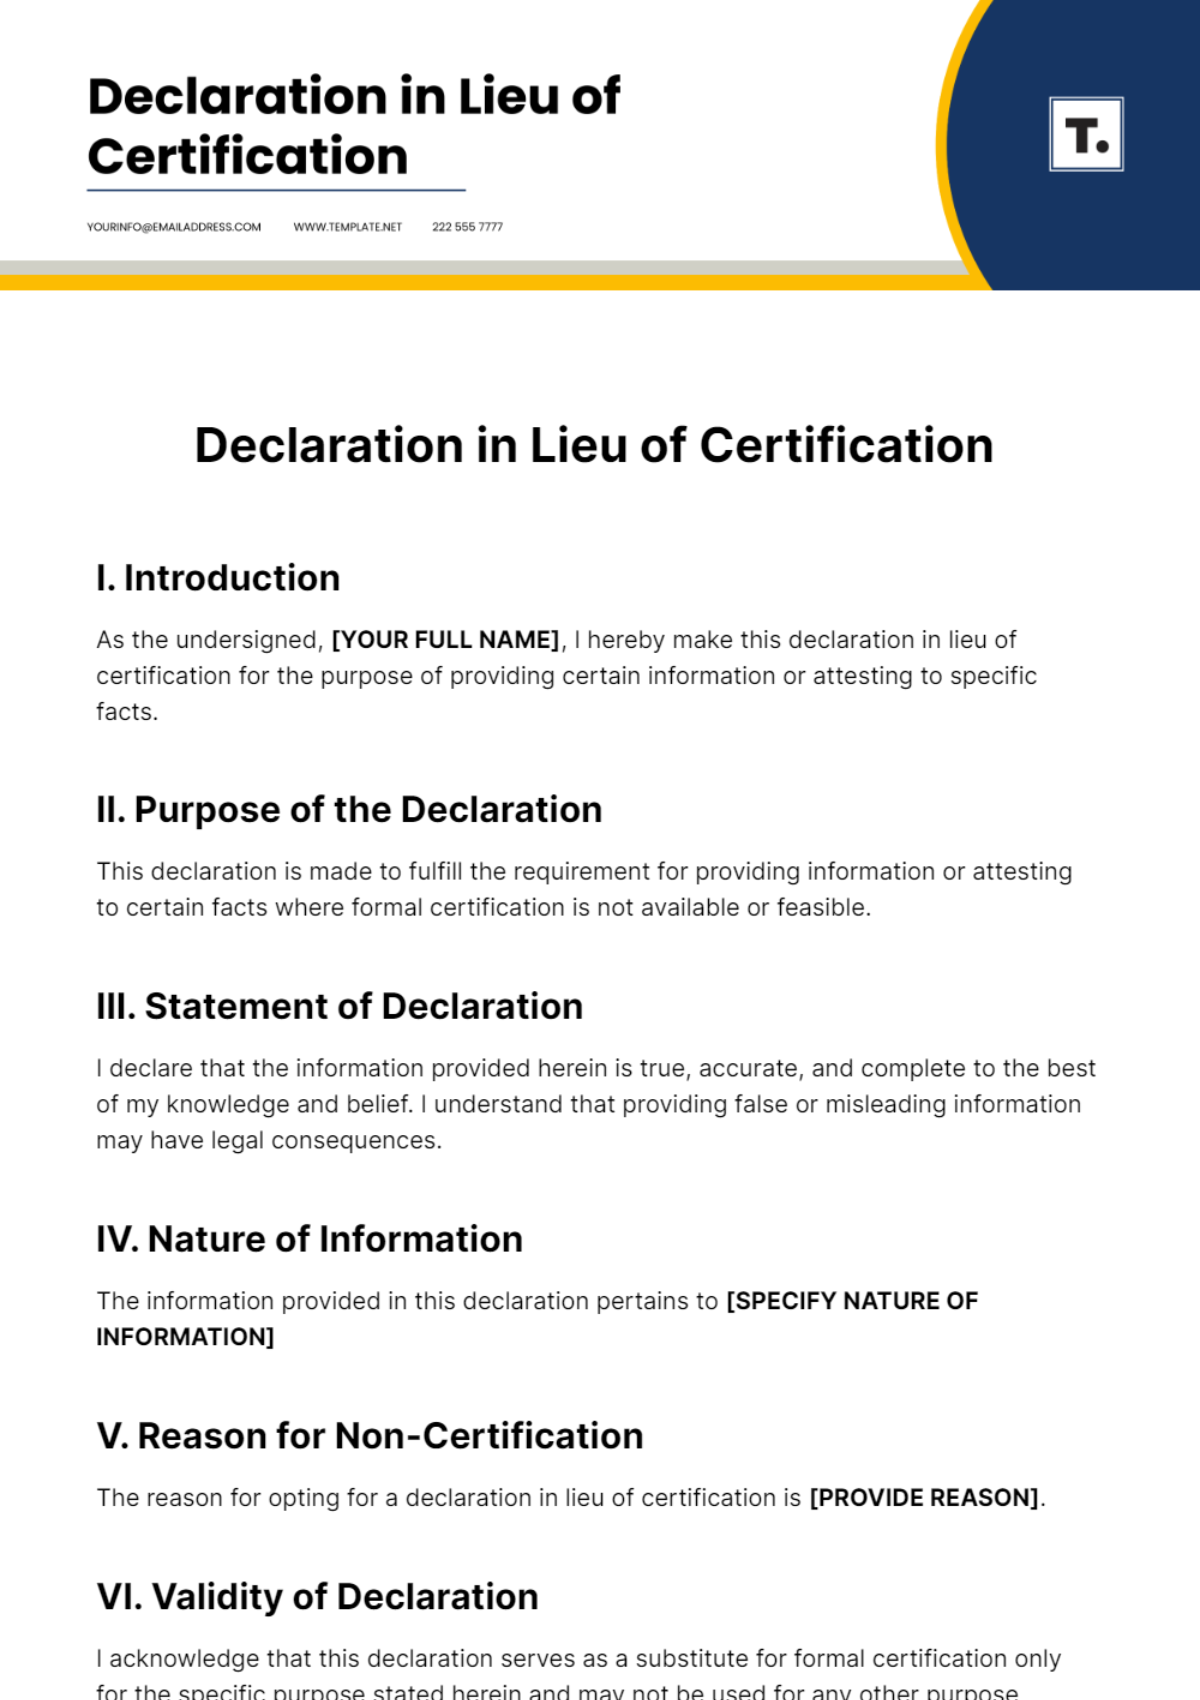 Declaration in Lieu of Certification Template